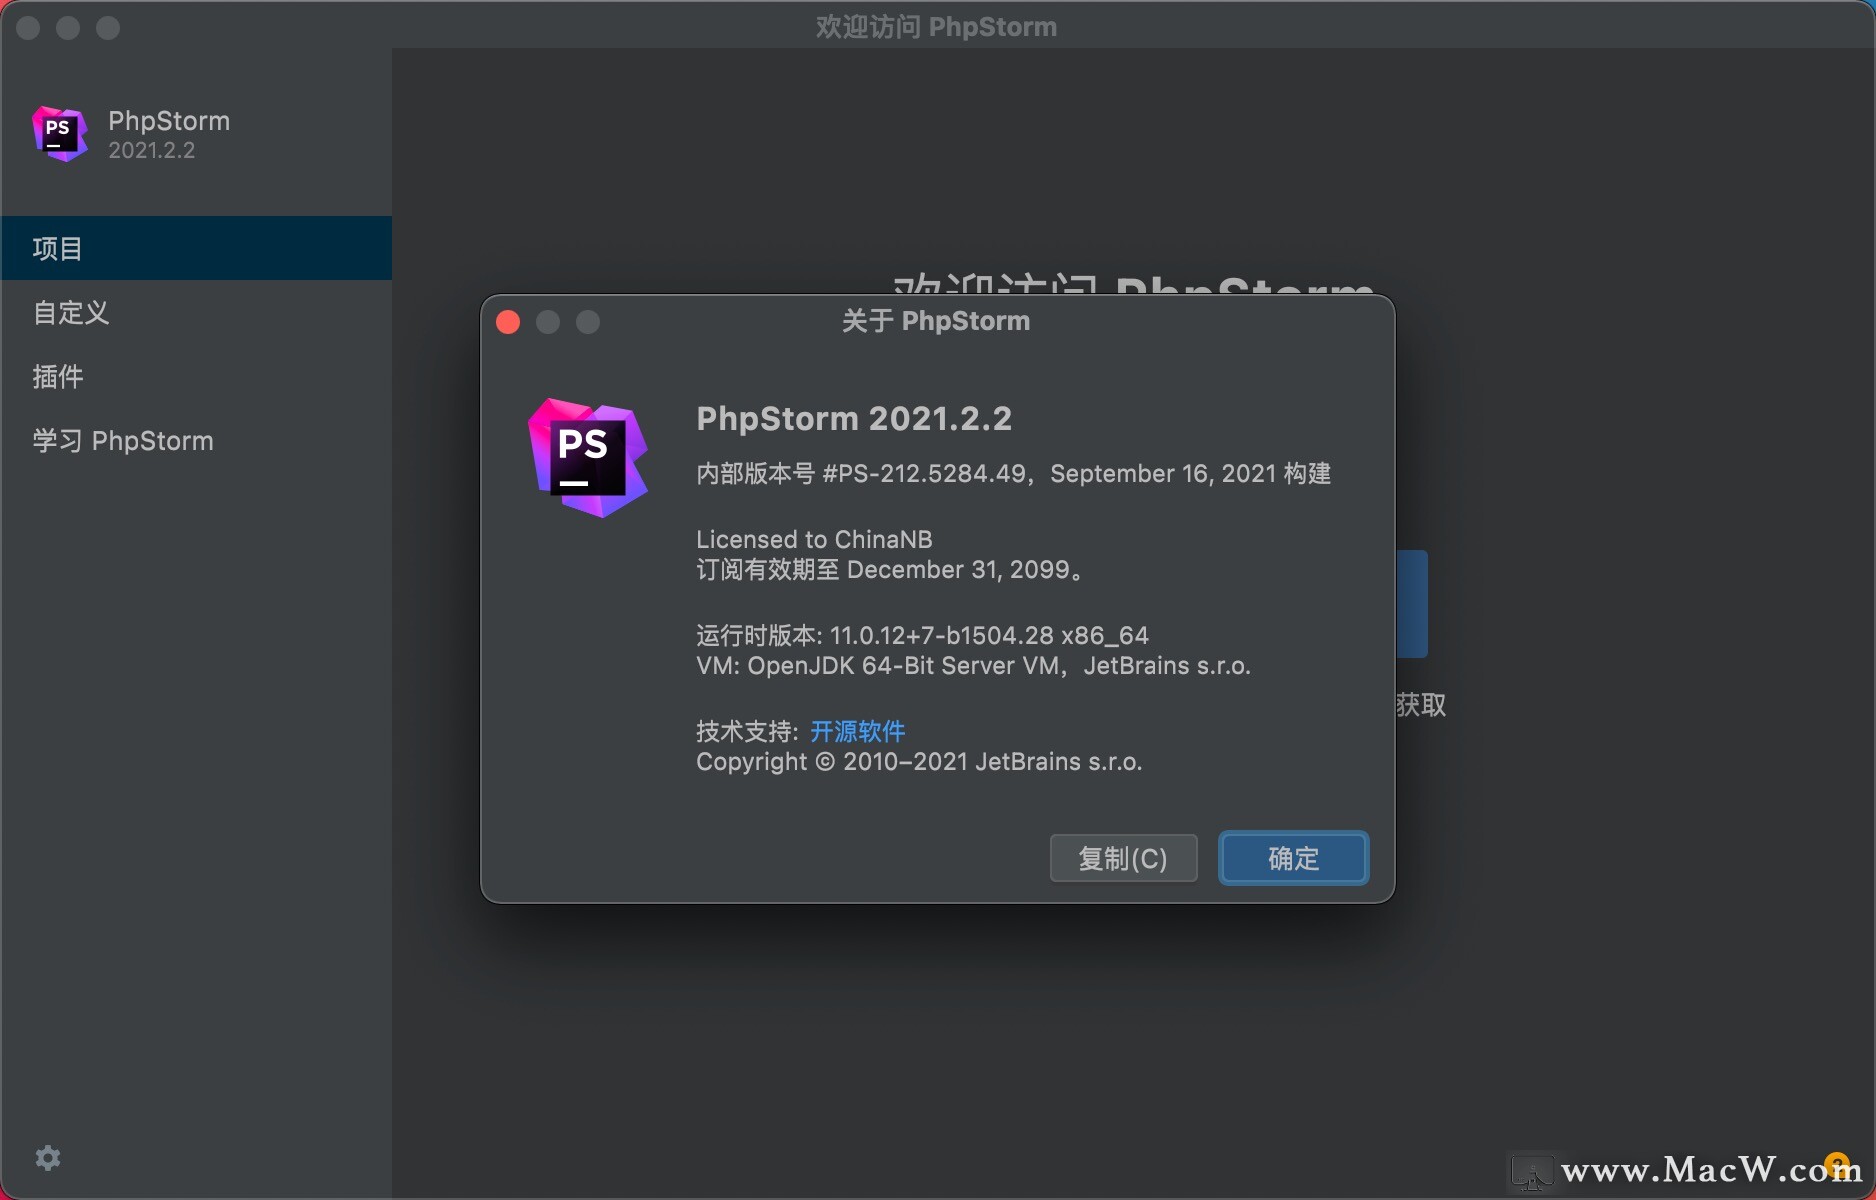 phpstorm download for mac